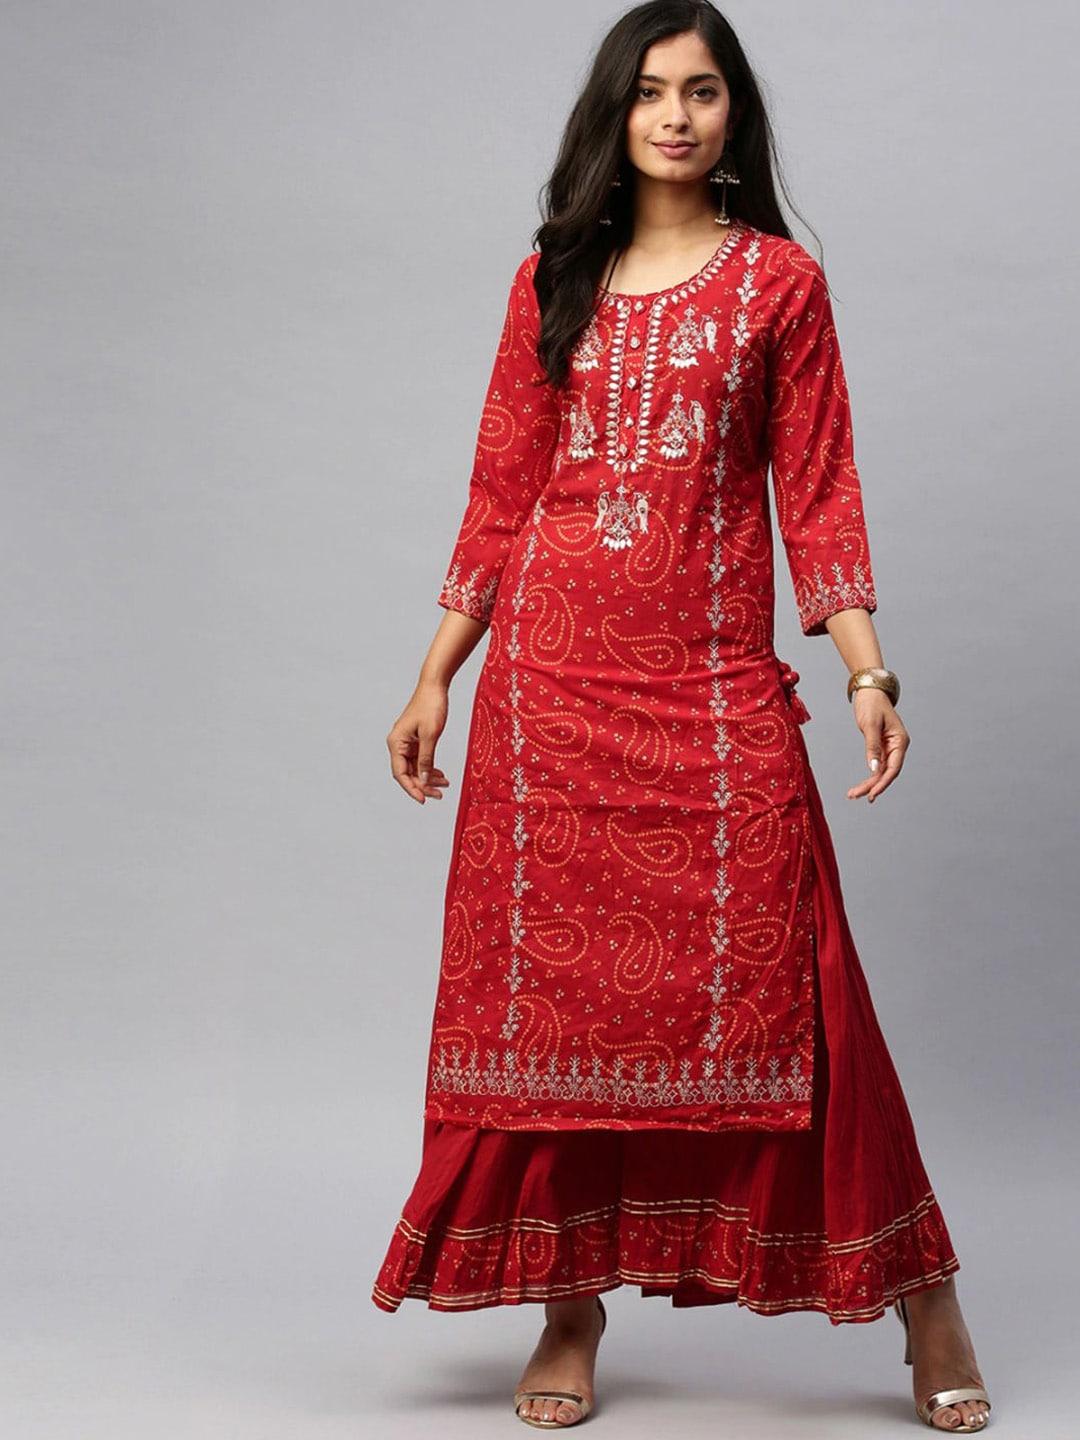 ishin women red ethnic motifs embroidered flared sleeves thread work anarkali kurta